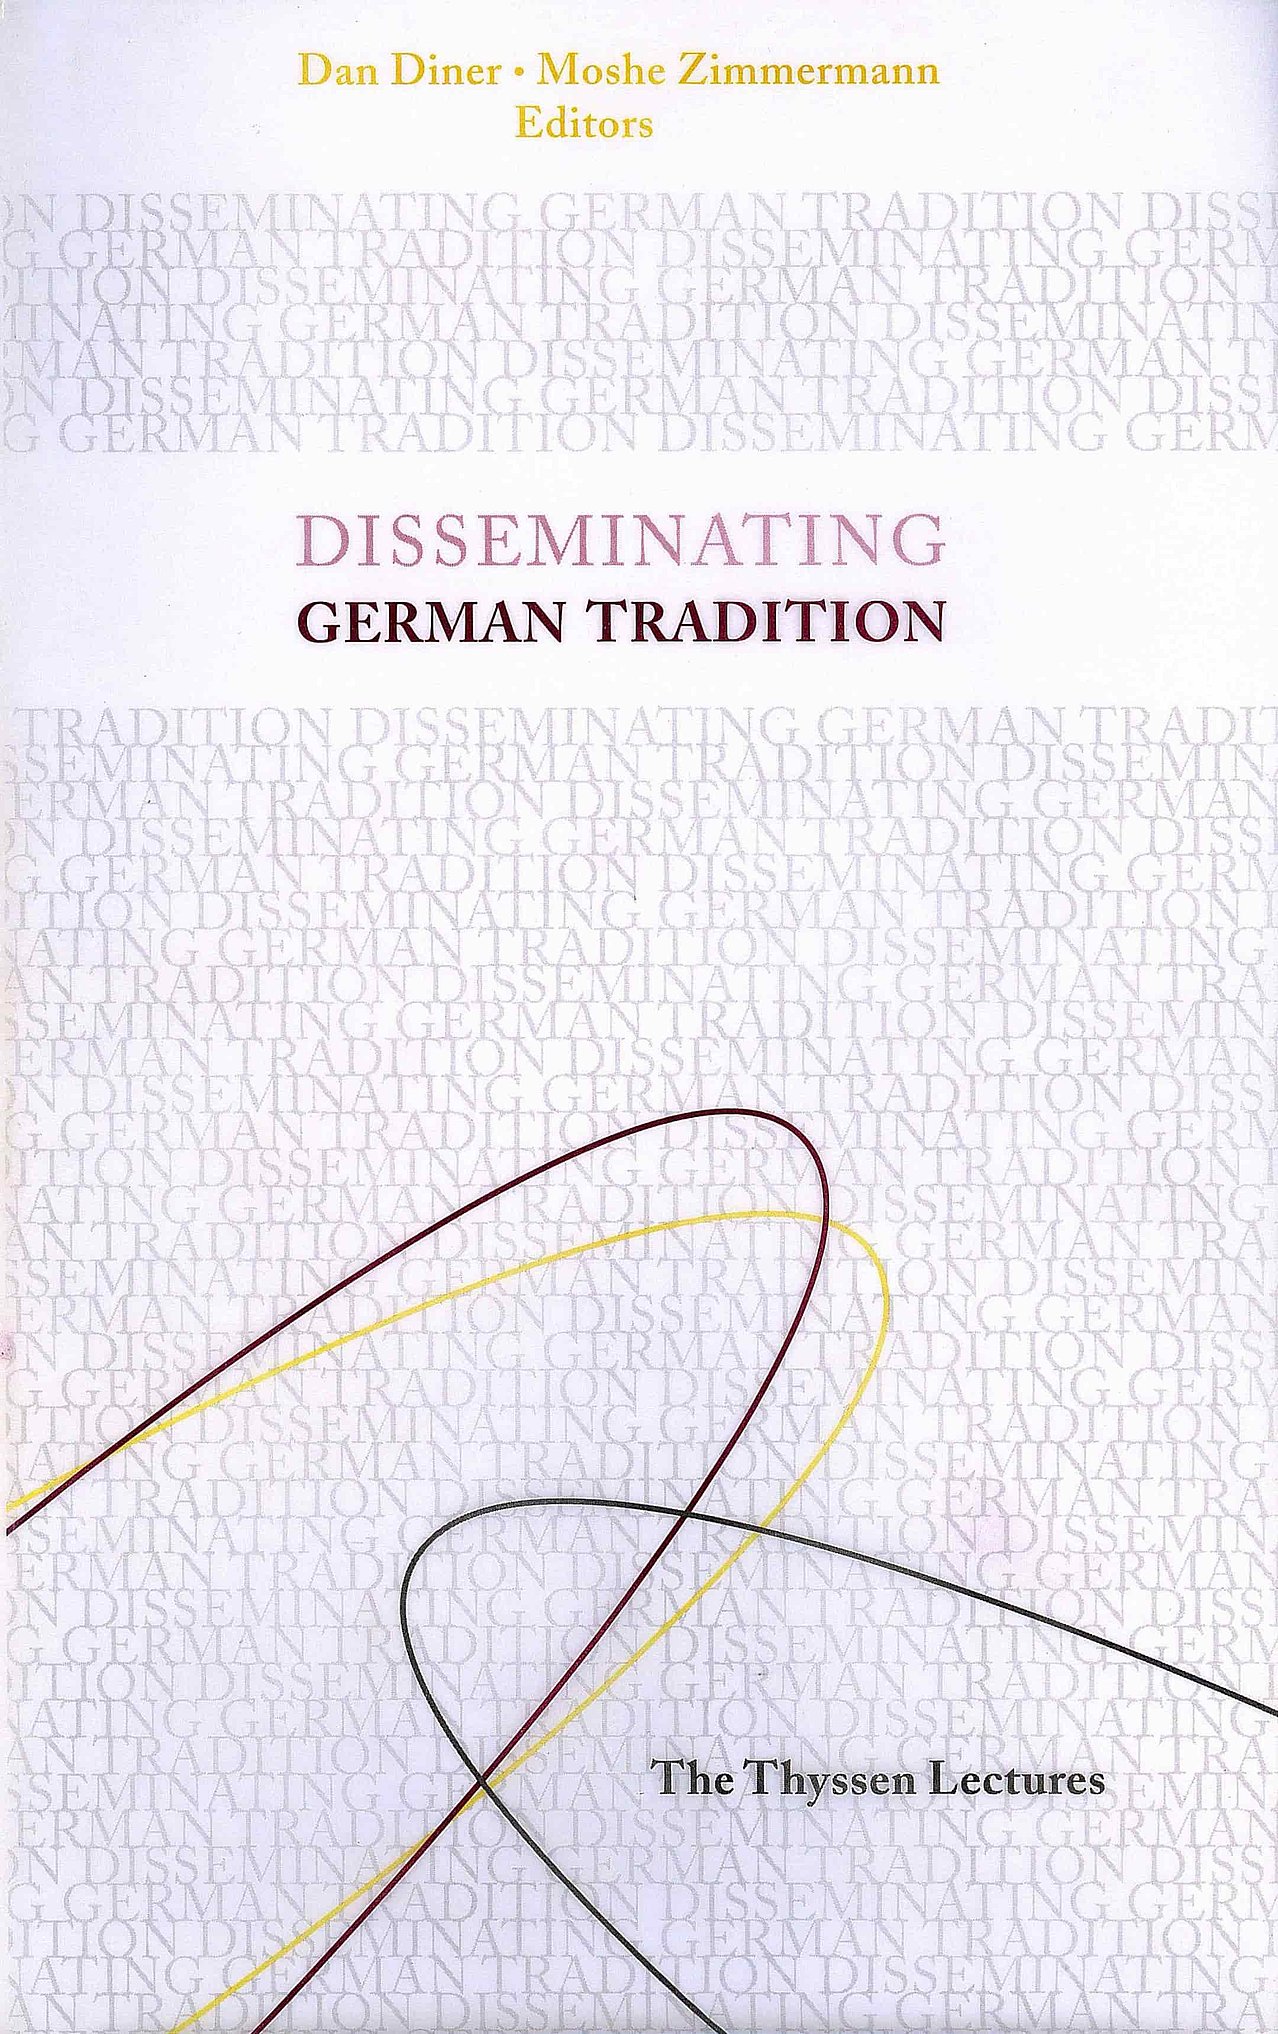 Publication, Disseminating German Tradition, 2009